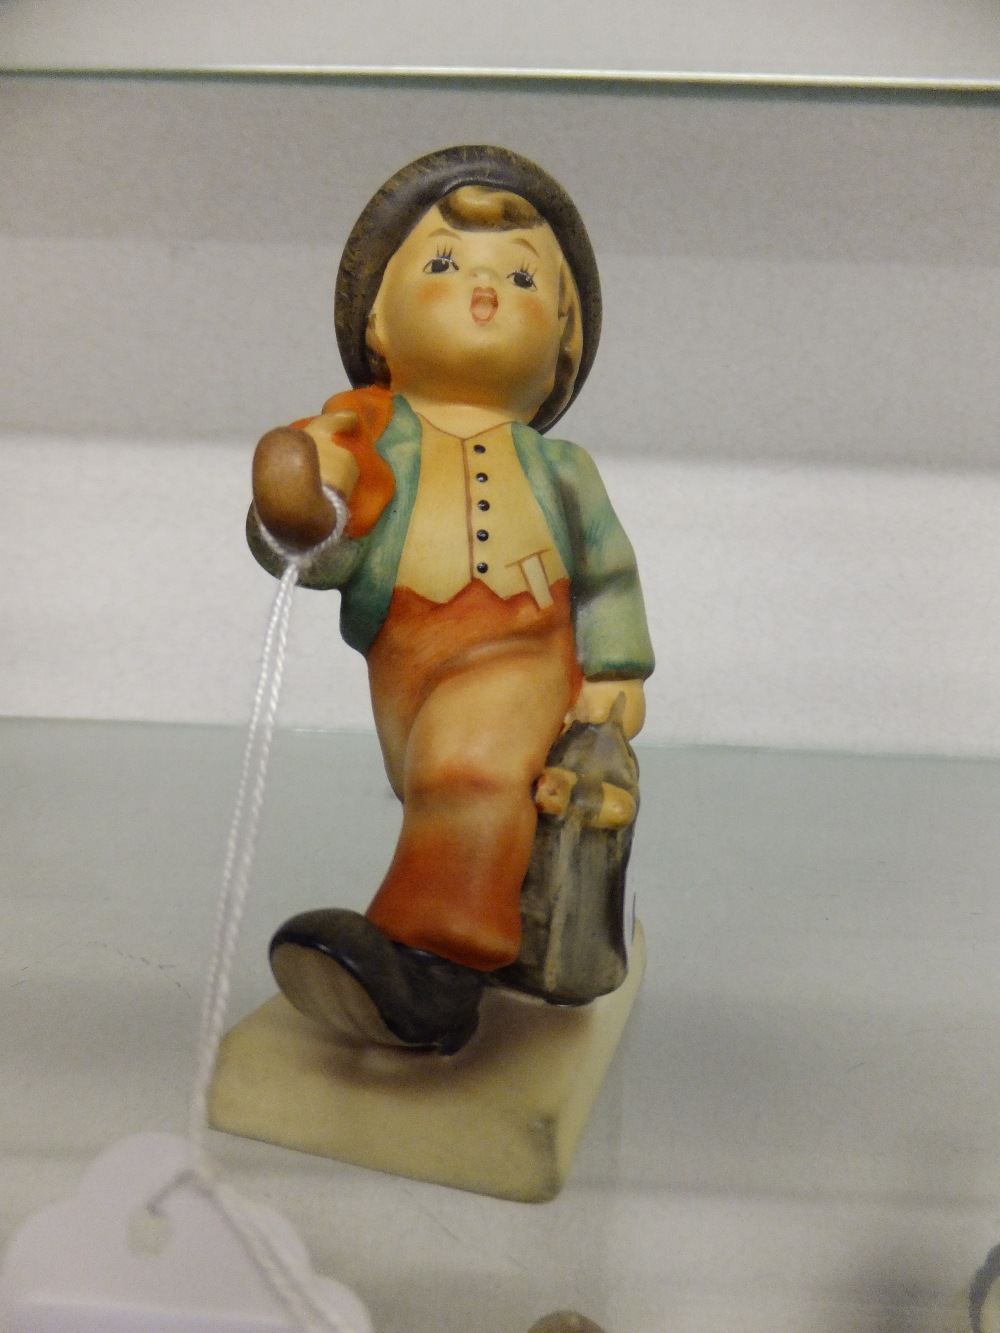 A Goebel figurine 'Merry Wanderer'